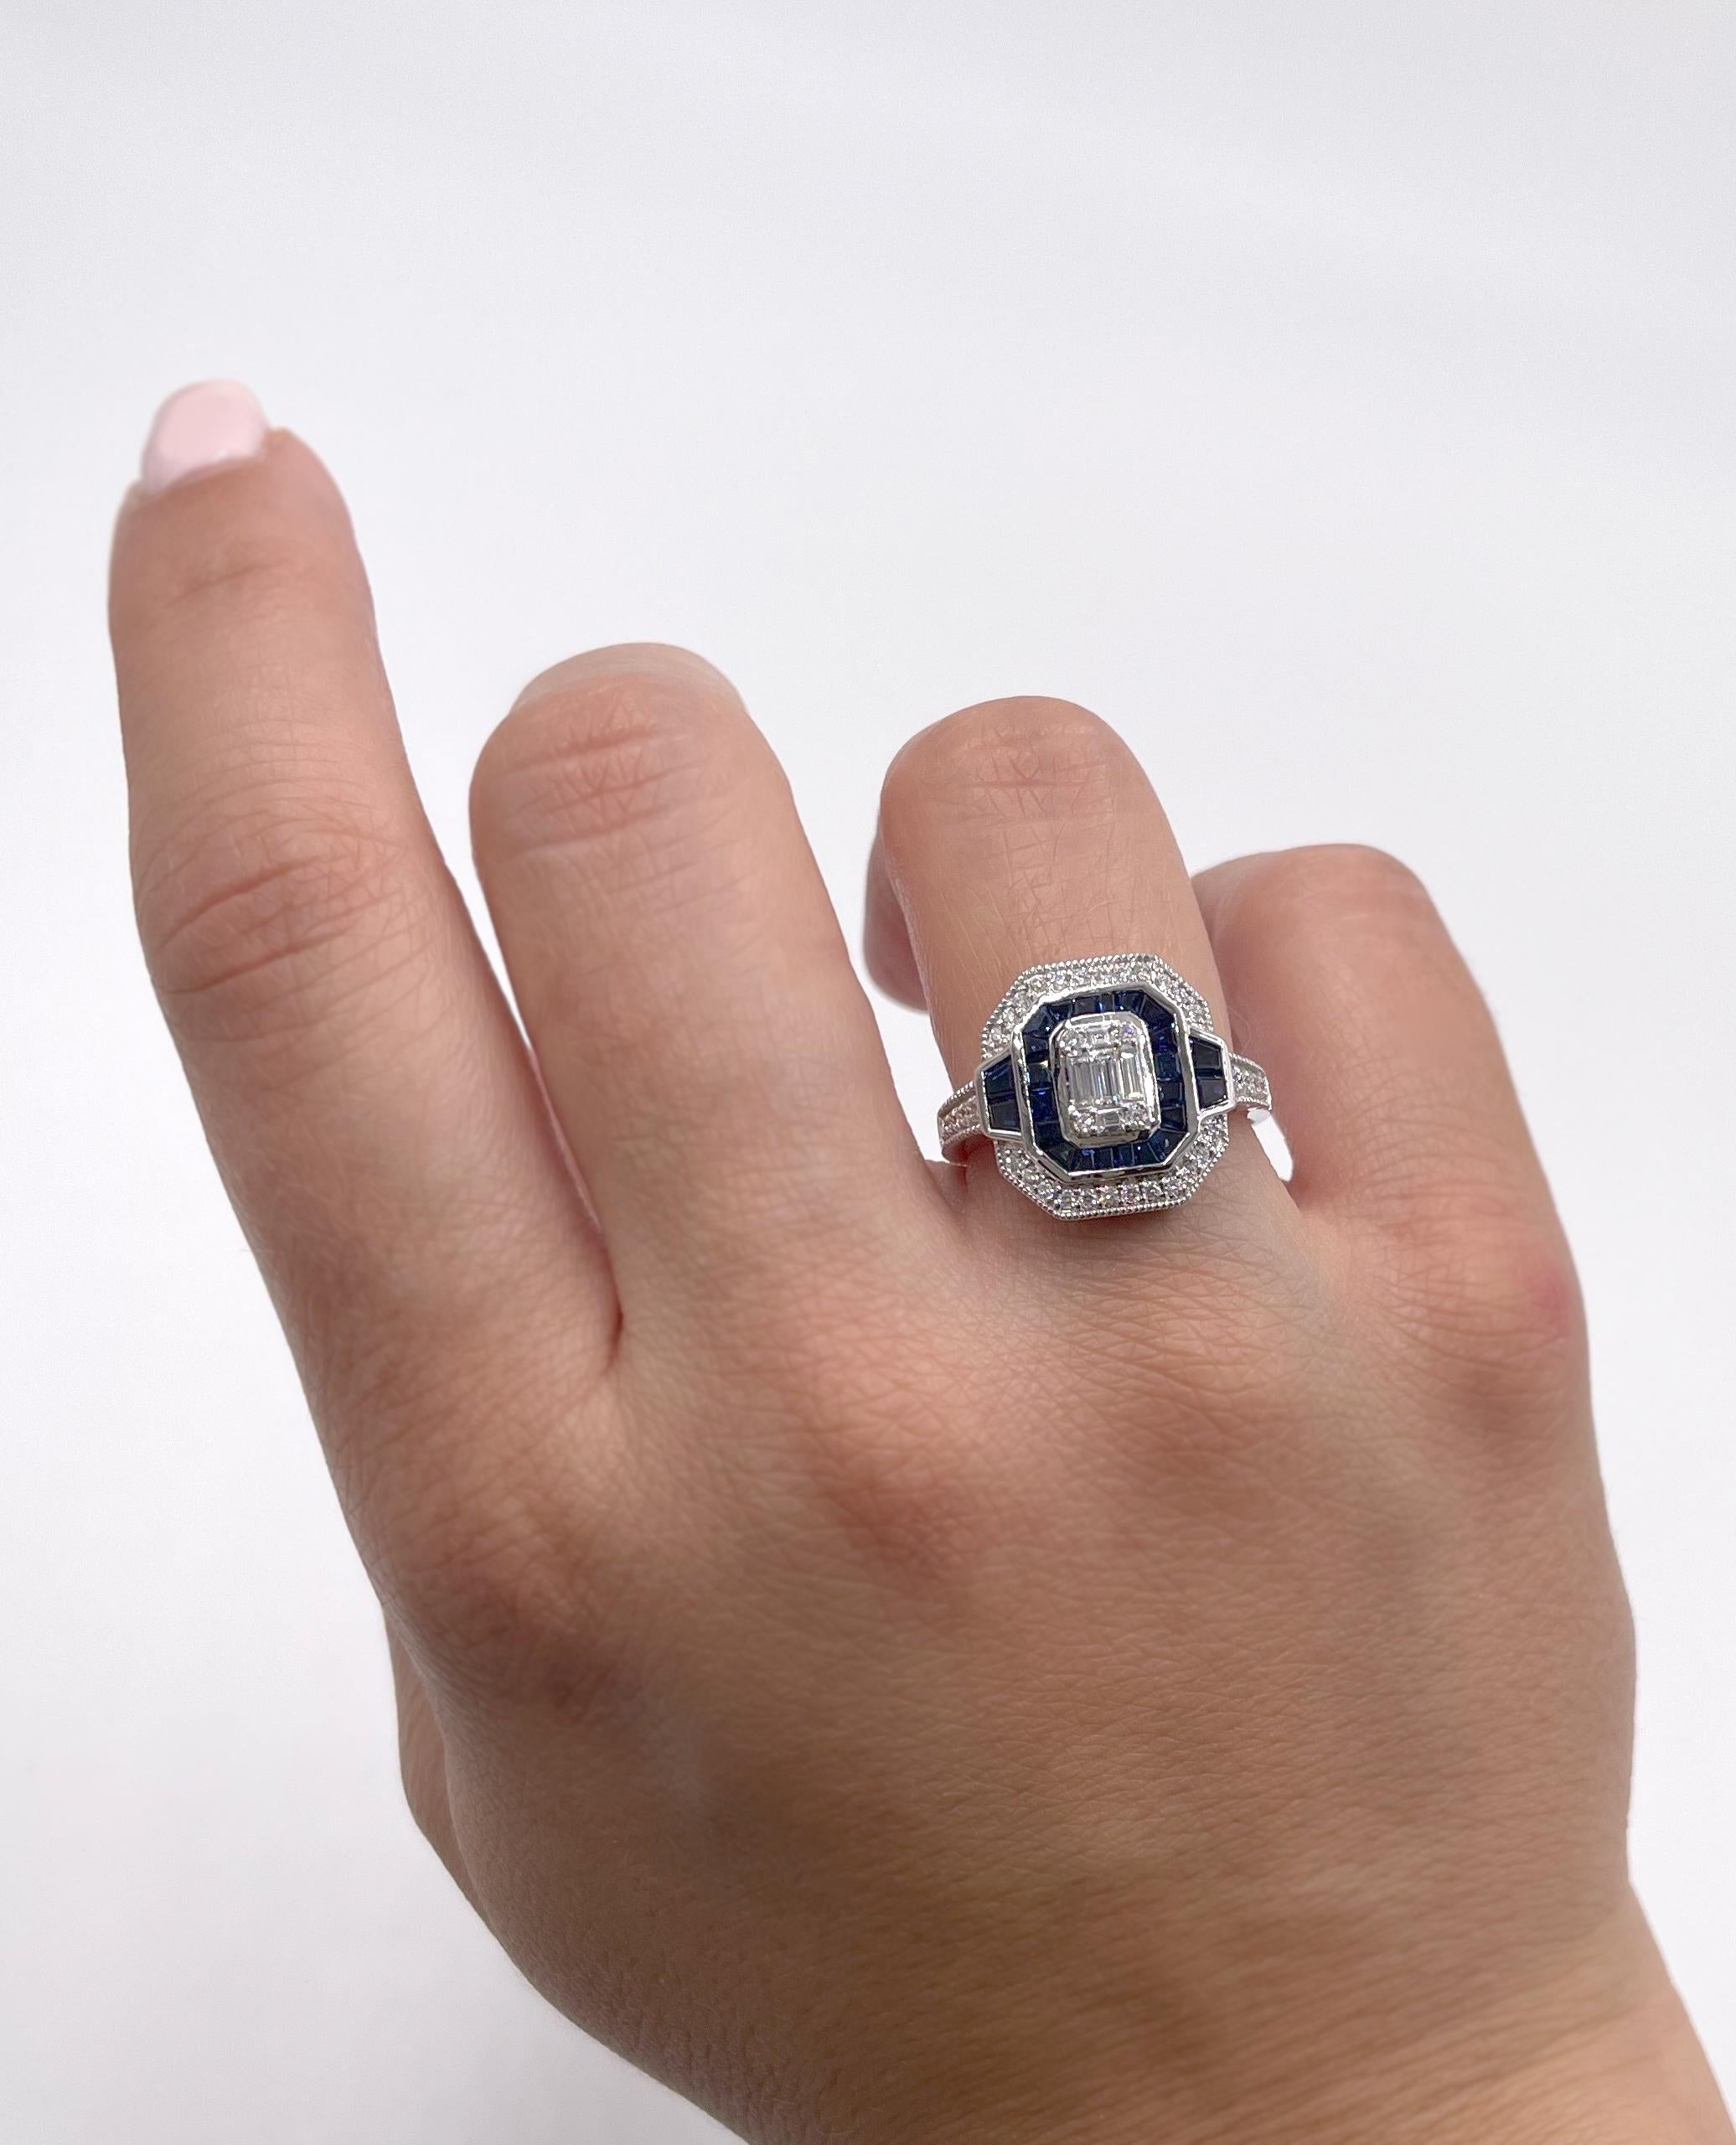 Baguette Cut Allison Kaufman Modern Art Deco Style 14K White Gold Sapphire and Diamond Ring